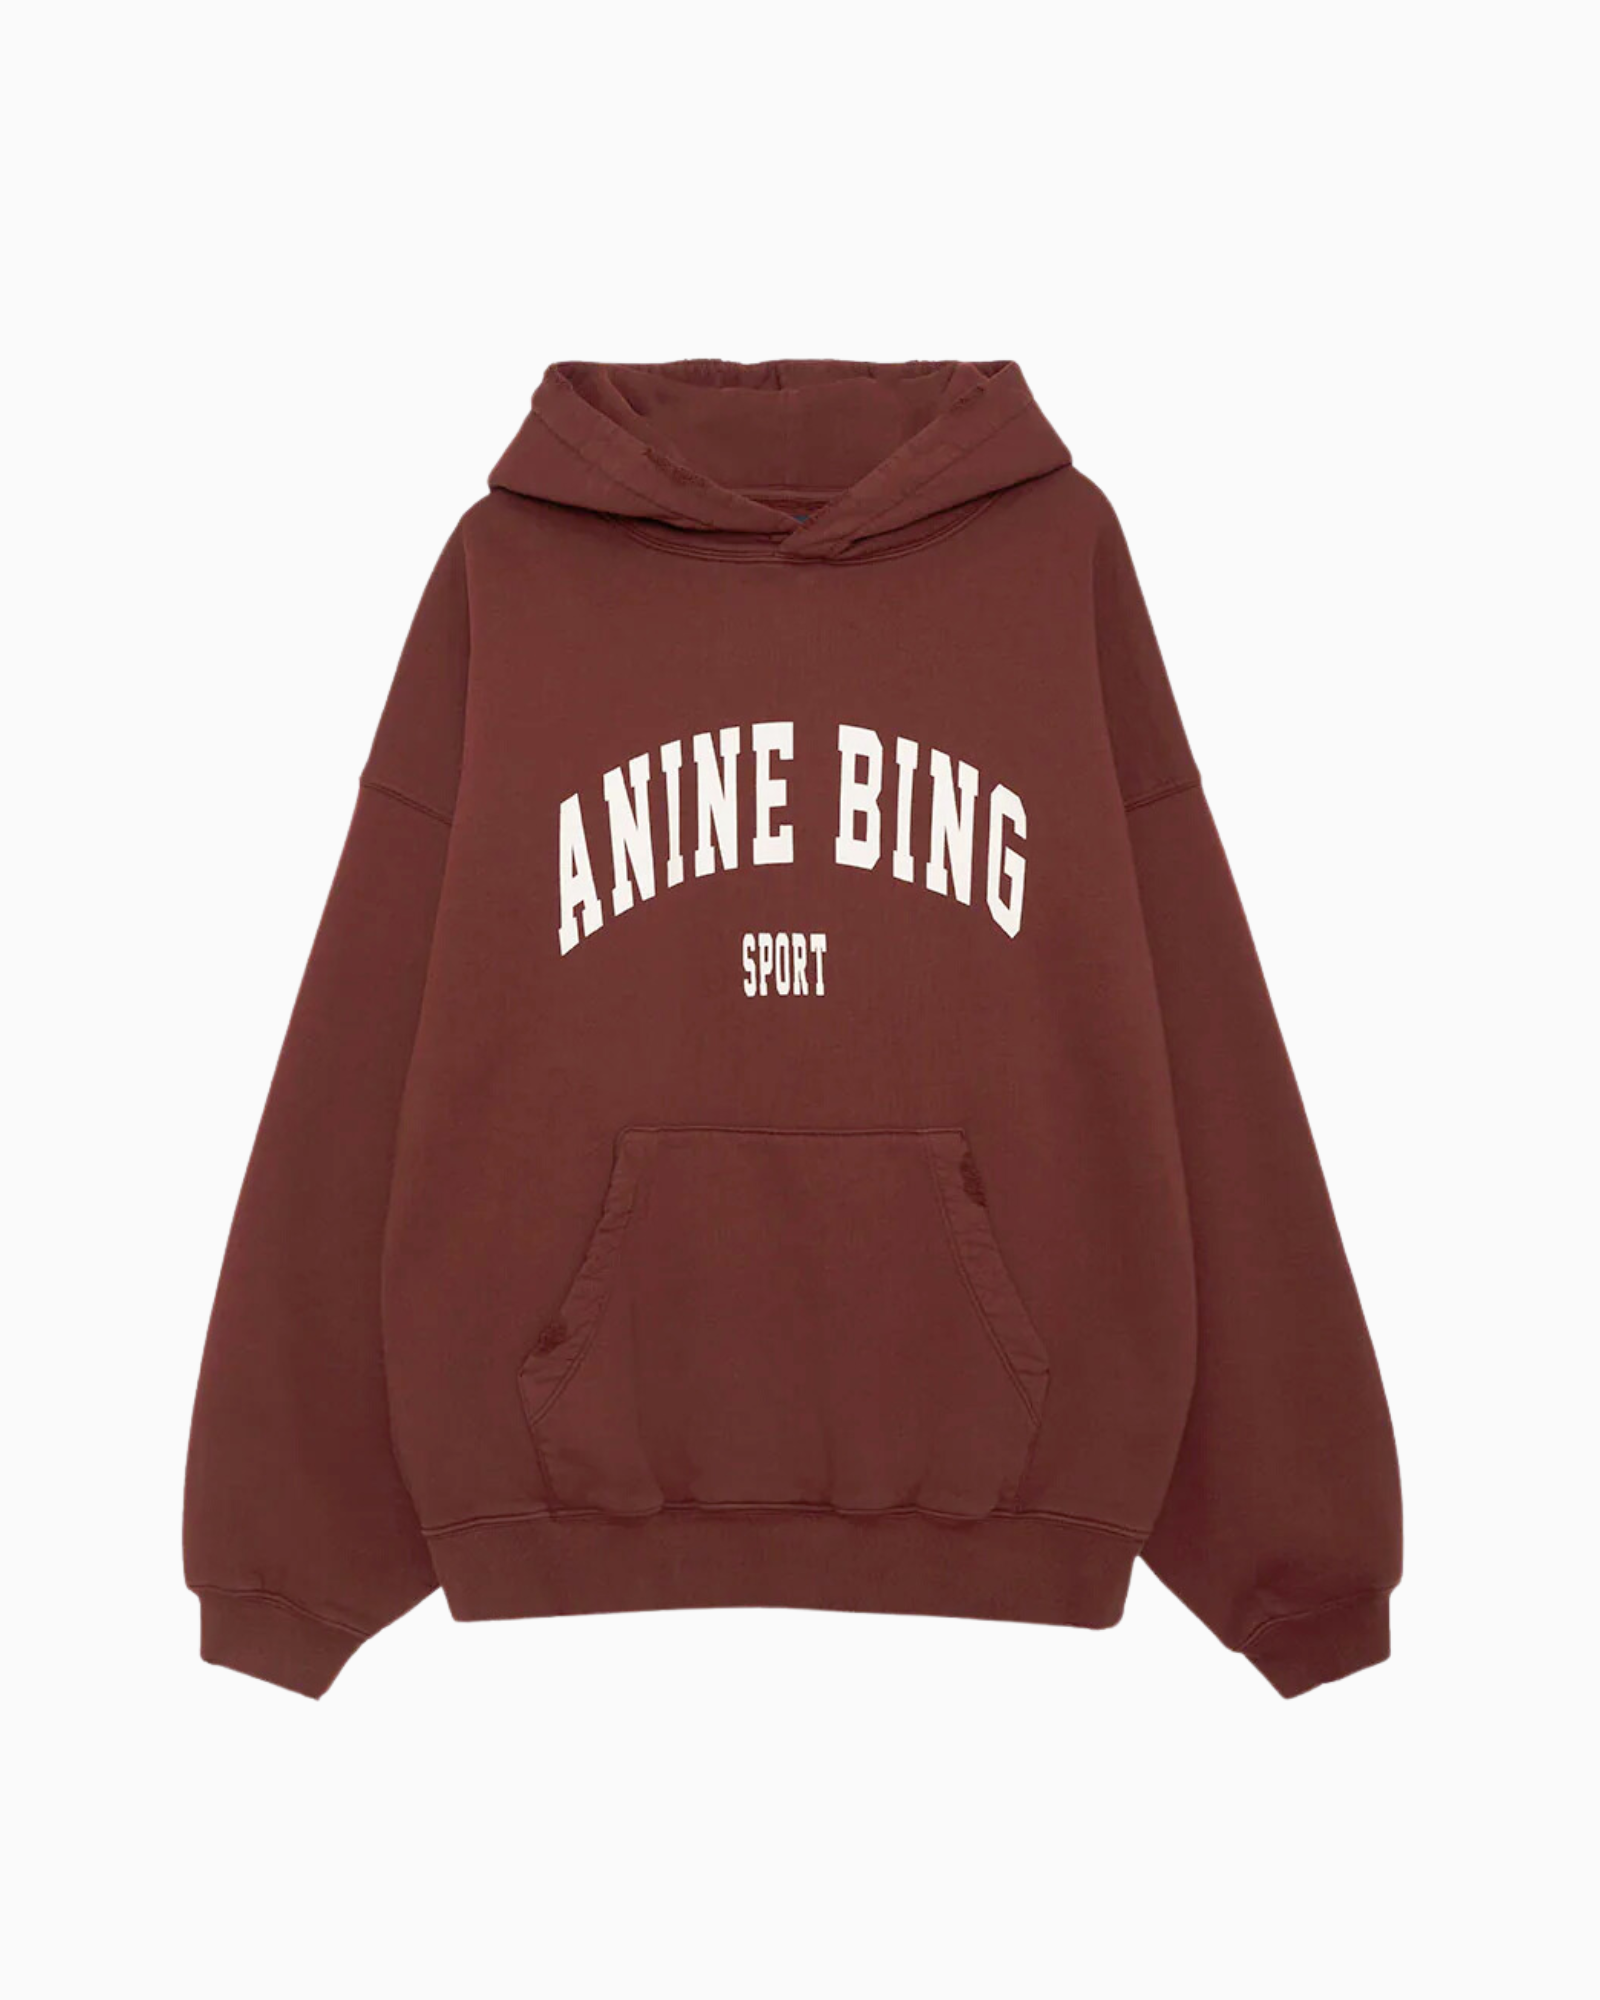 Anine Bing Harvey Sweatshirt in Dark Cherry